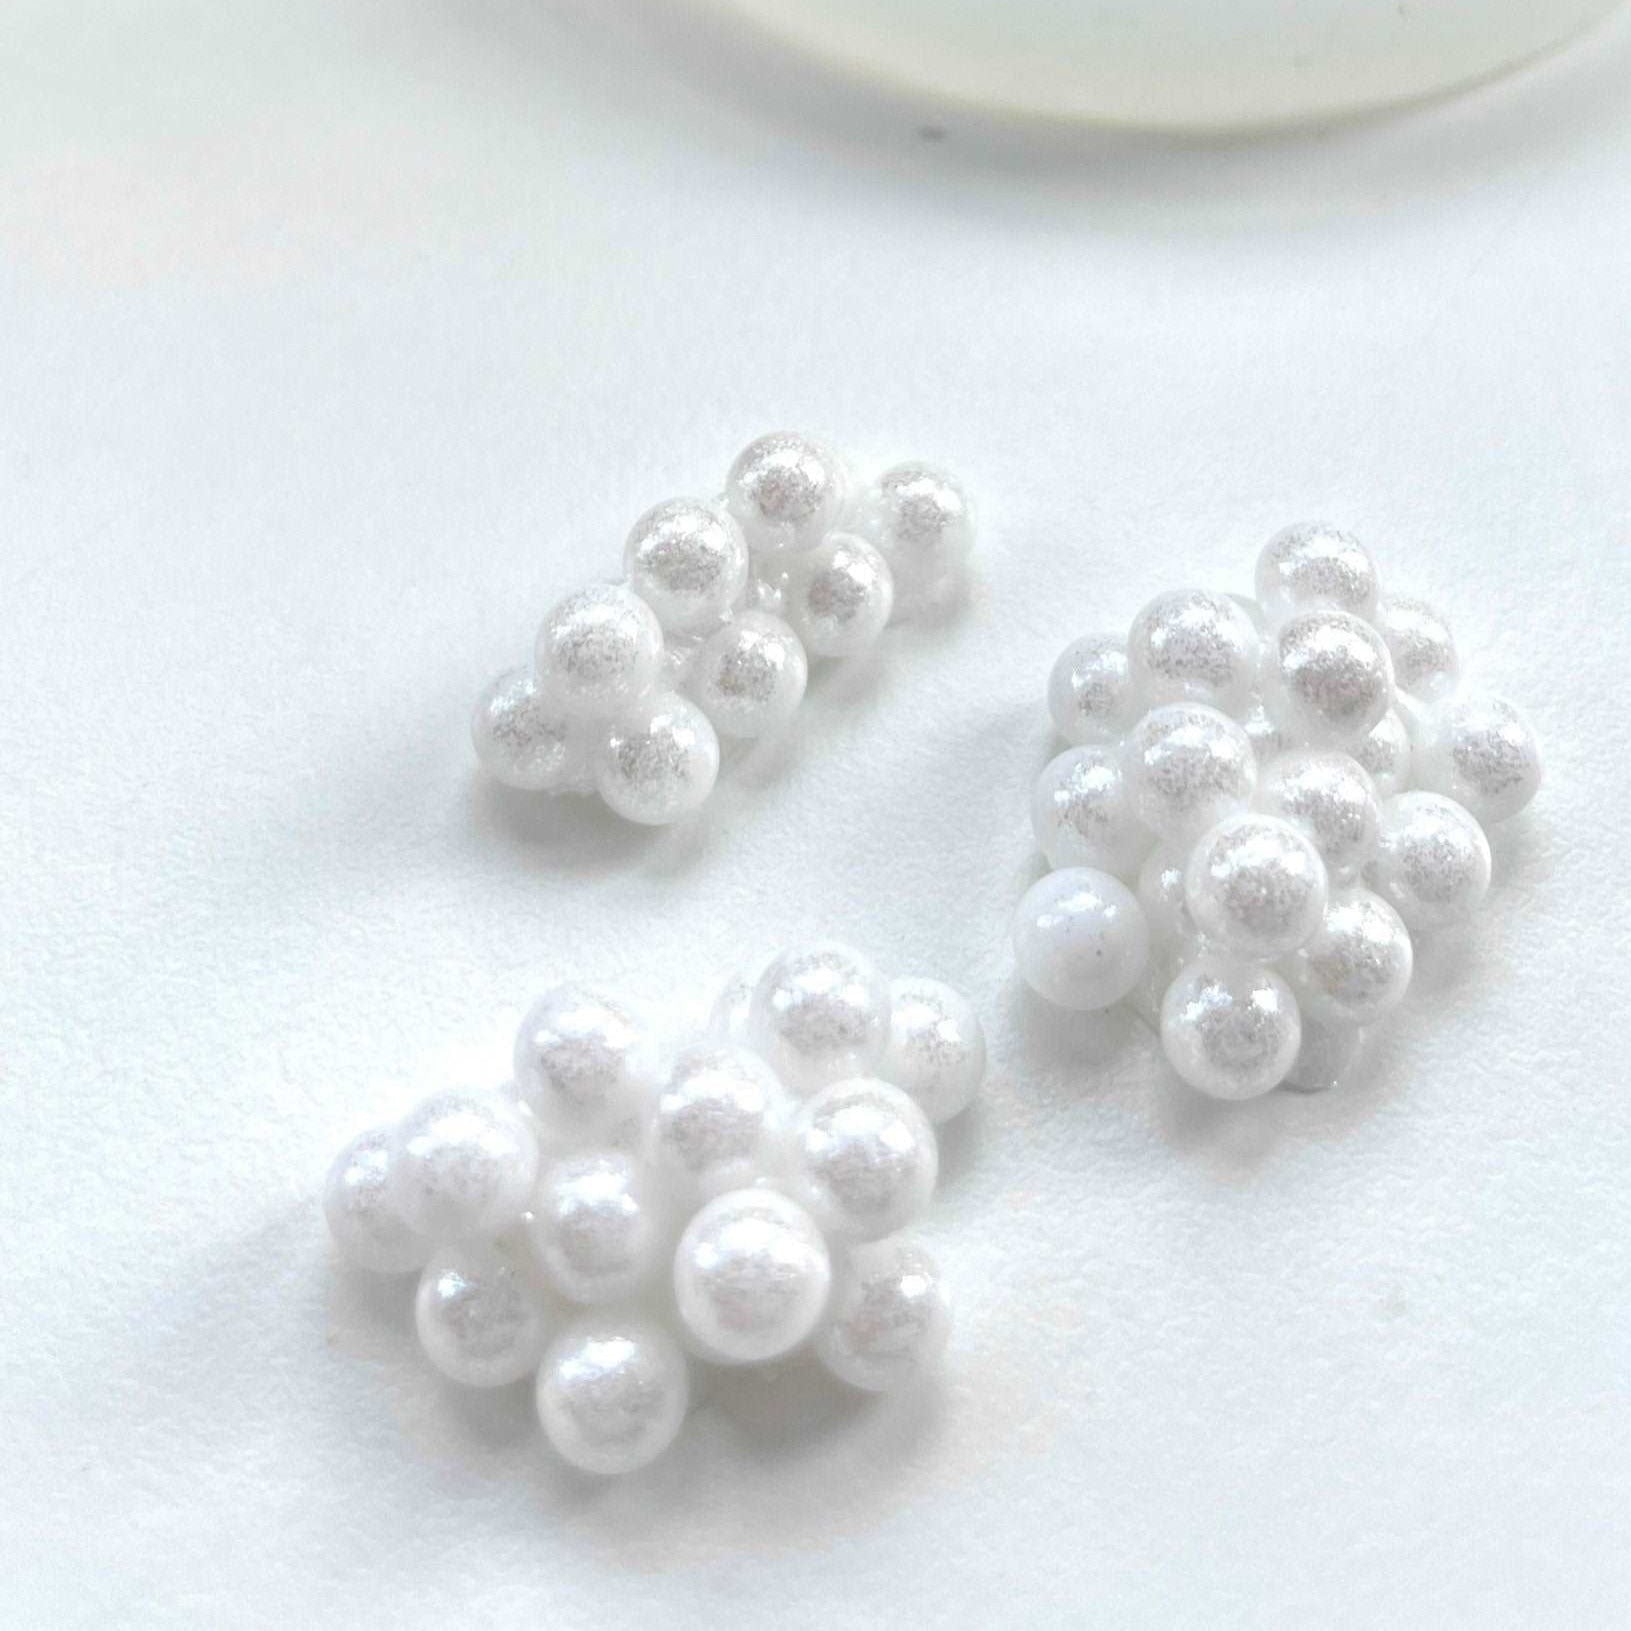 3 Little Jewelry Unique Bubbles Silicone mold. Abstract epoxy mold bubble mould silicone resin art bubble stone molding